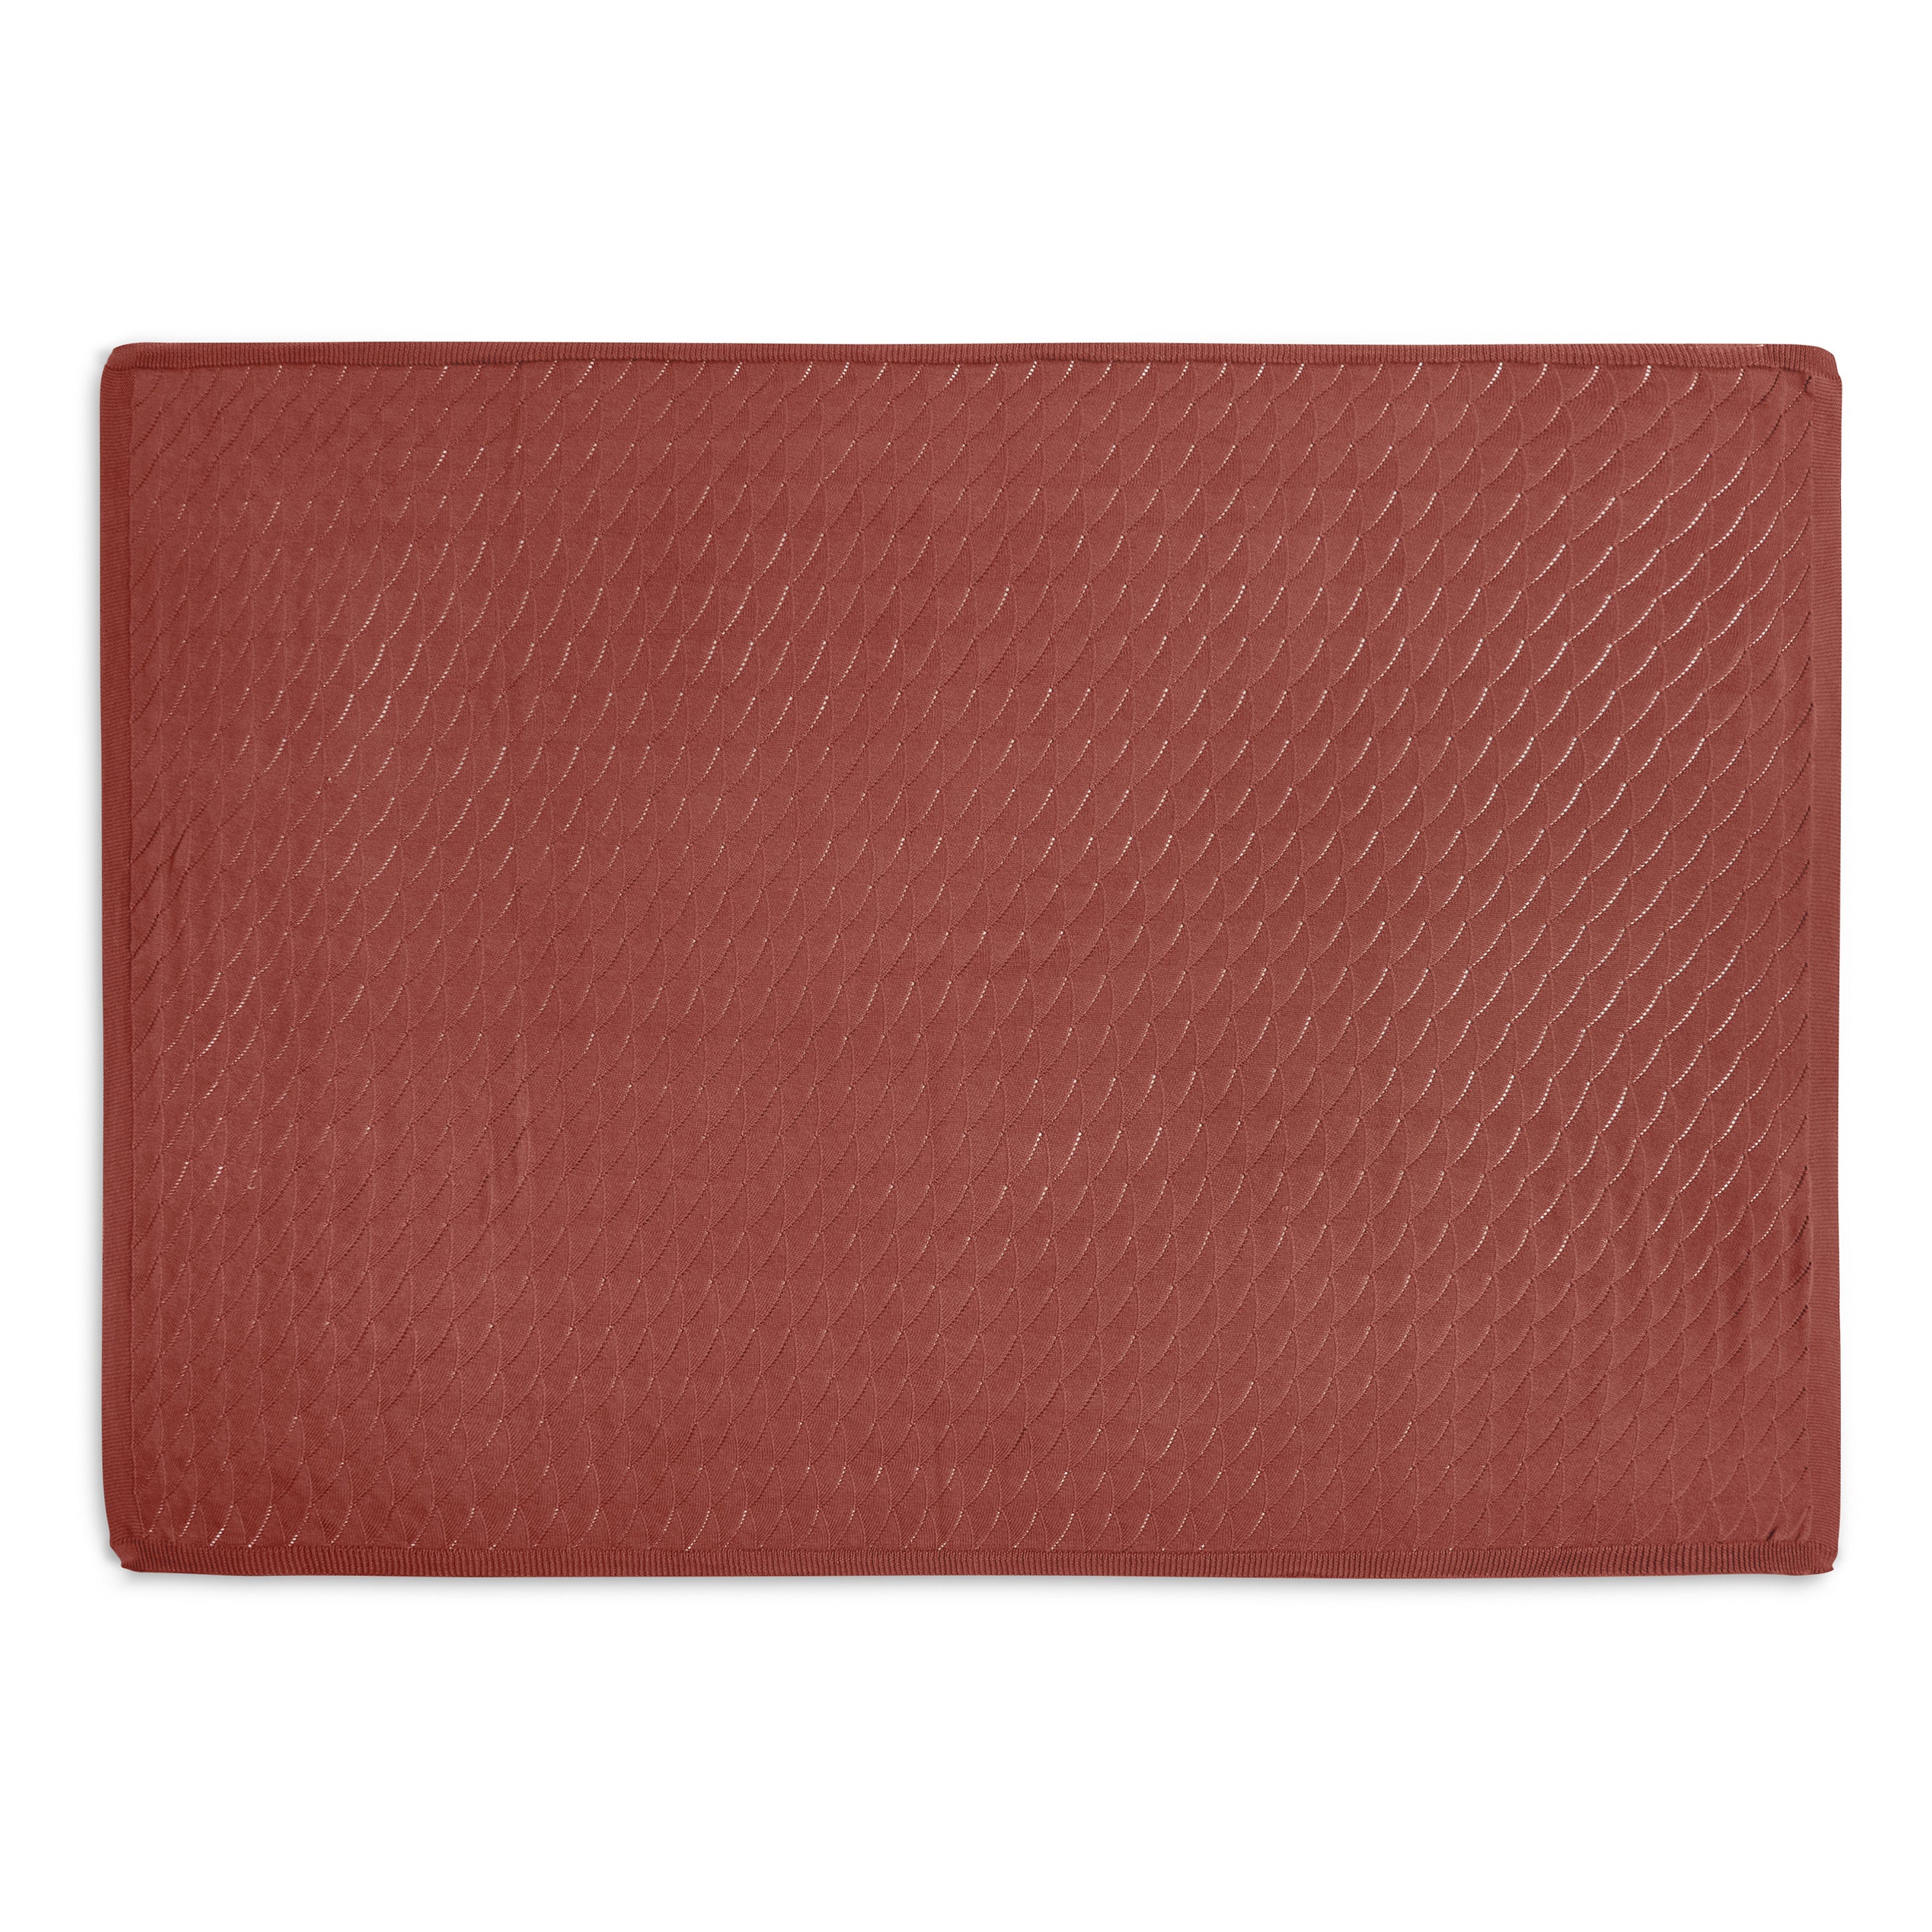 Wave Knit Blanket - Tawny Pink - Avery Row